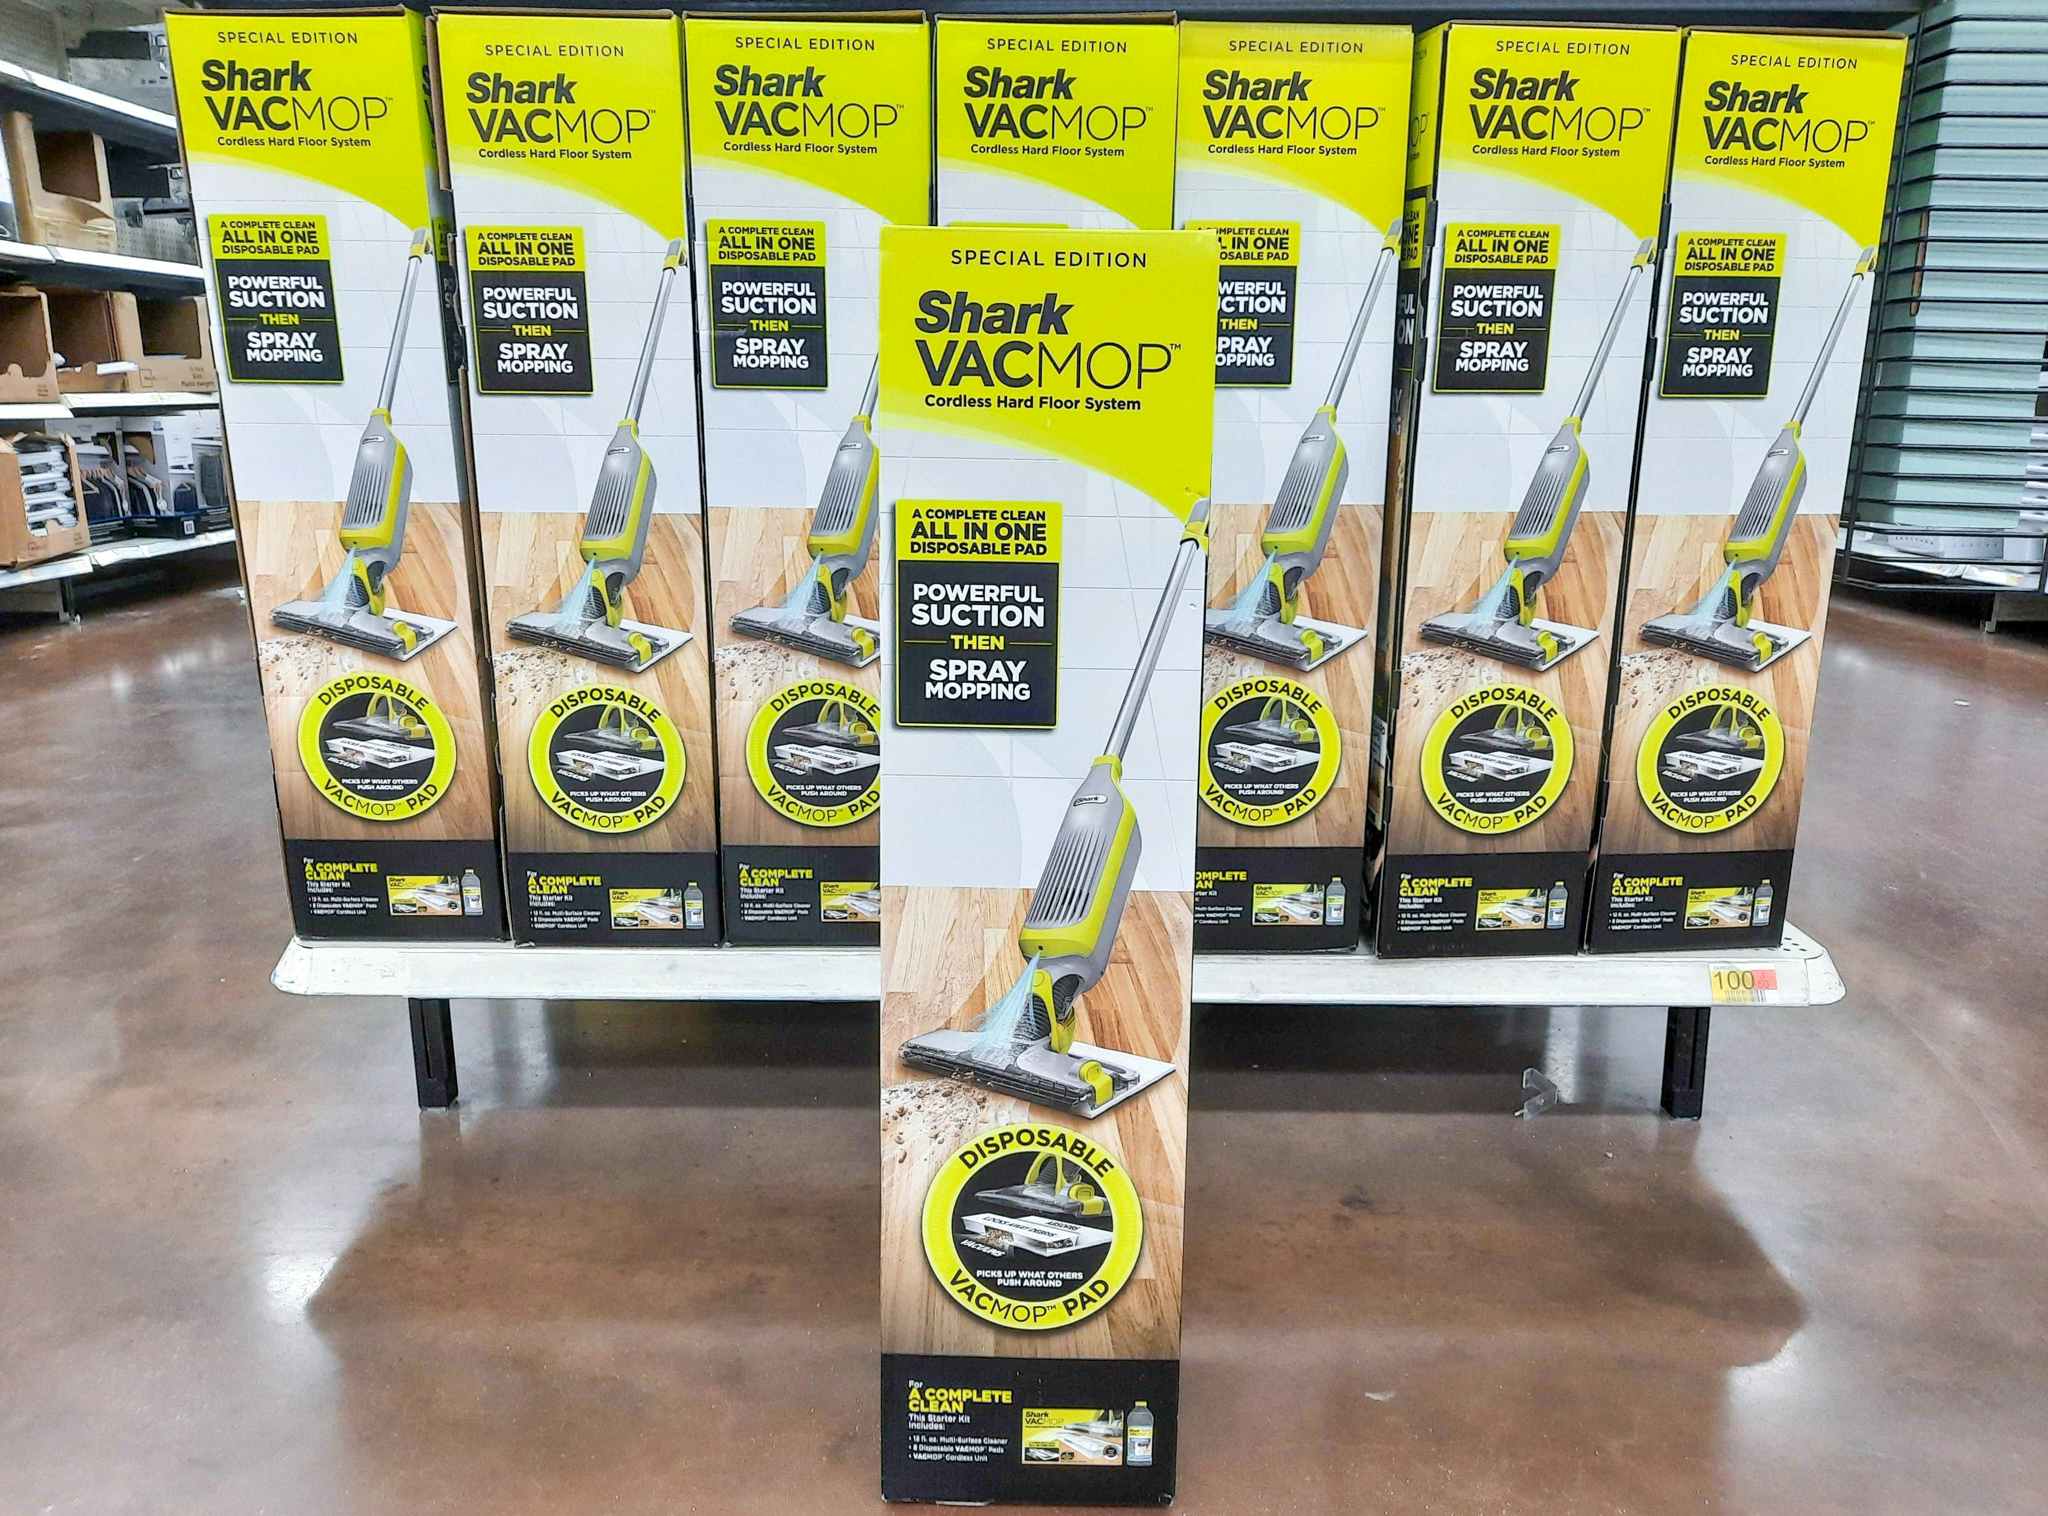 Shark Vacmop at Walmart